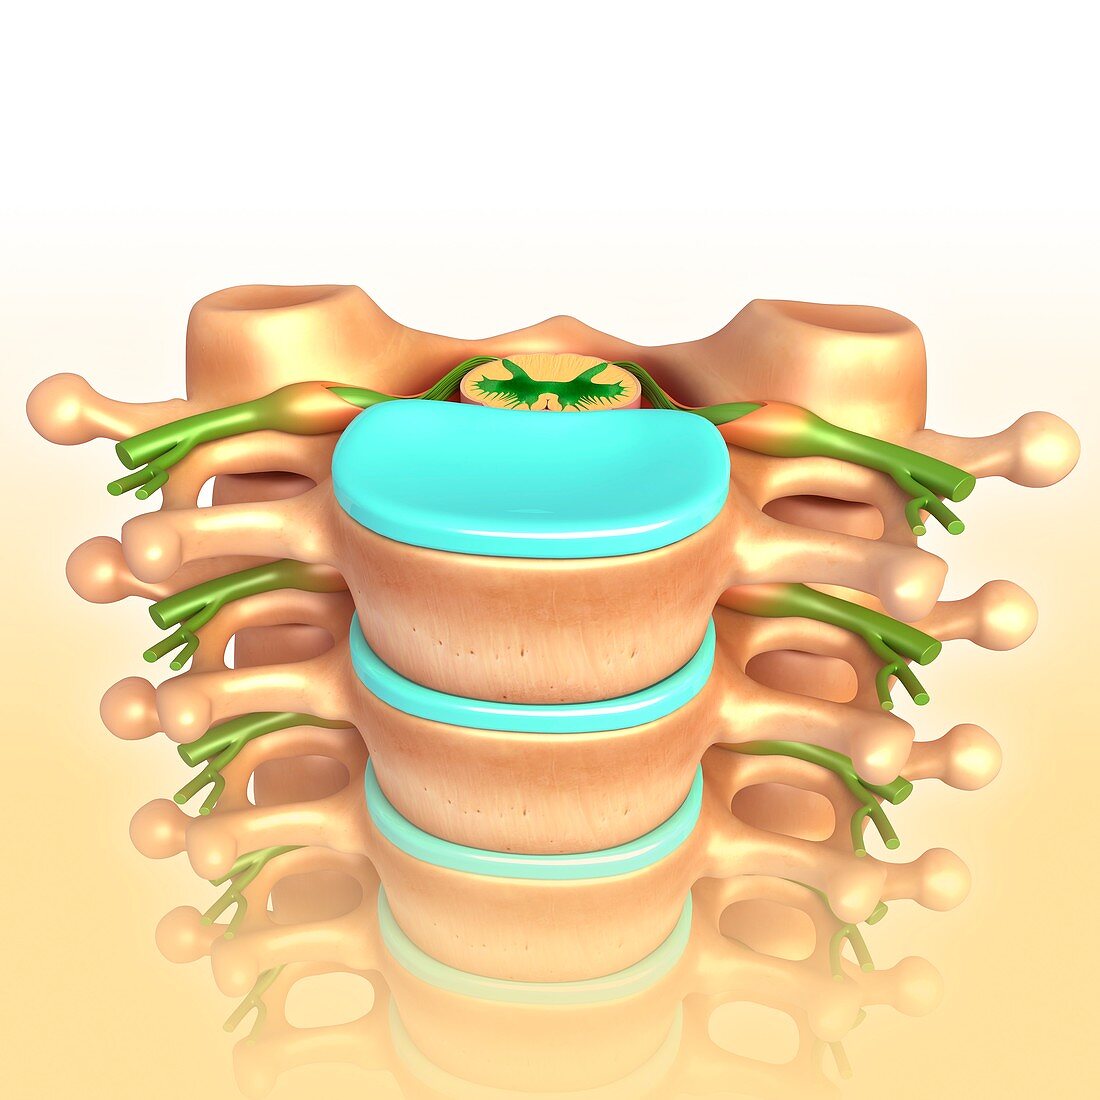 Lumbar vertebrae, illustration